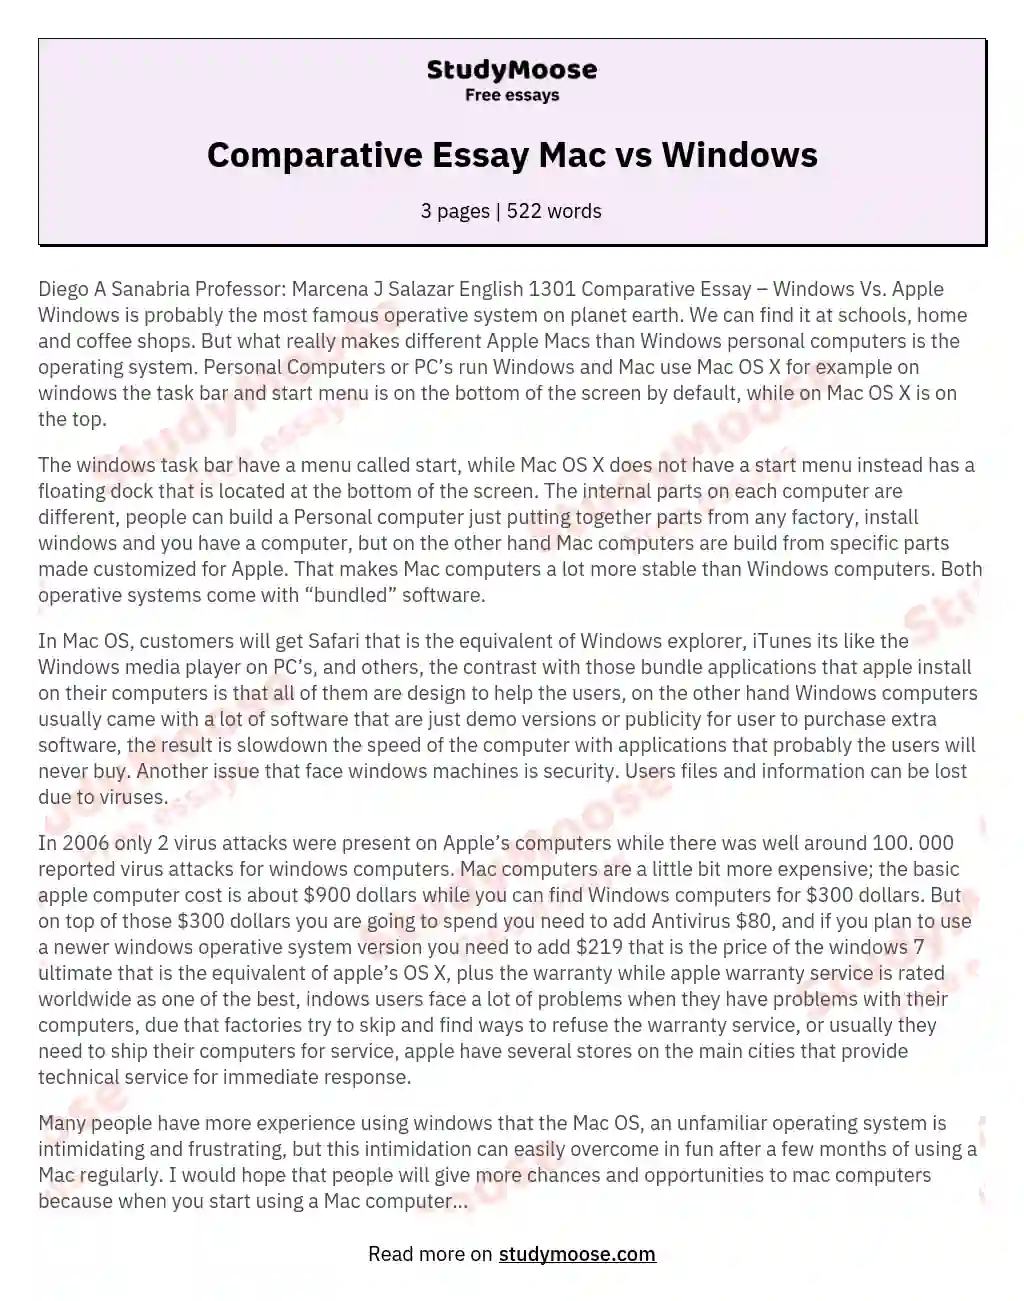 Comparative Essay Mac vs Windows essay